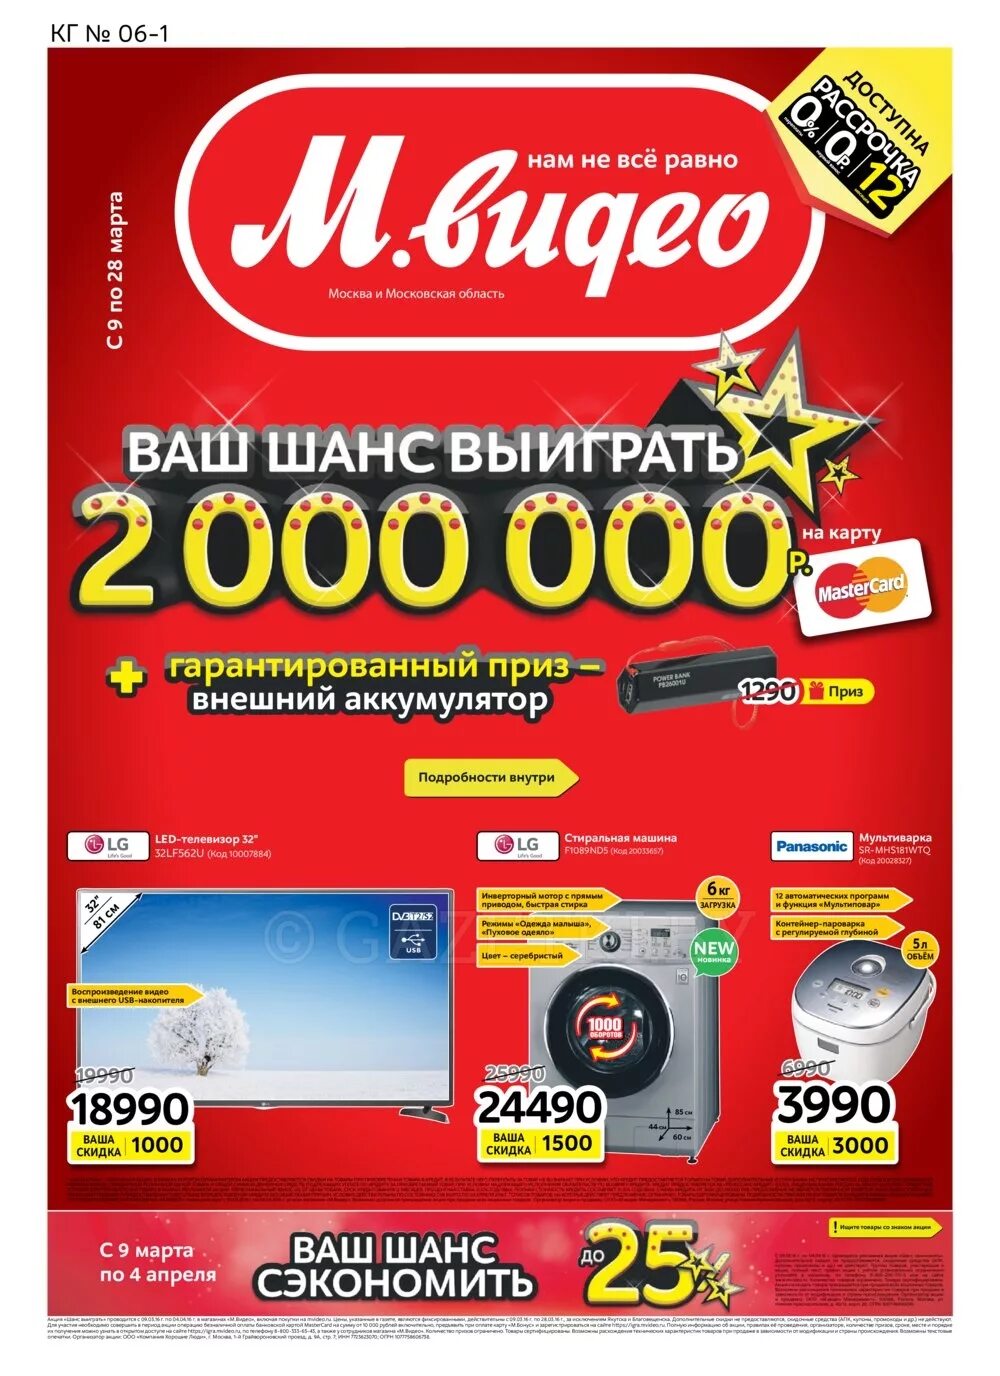 Мвидео ru интернет магазин. М-видео интернет-магазин. М видим интернет магазин. М видео каталог. Магазин м-видео каталог товаров.